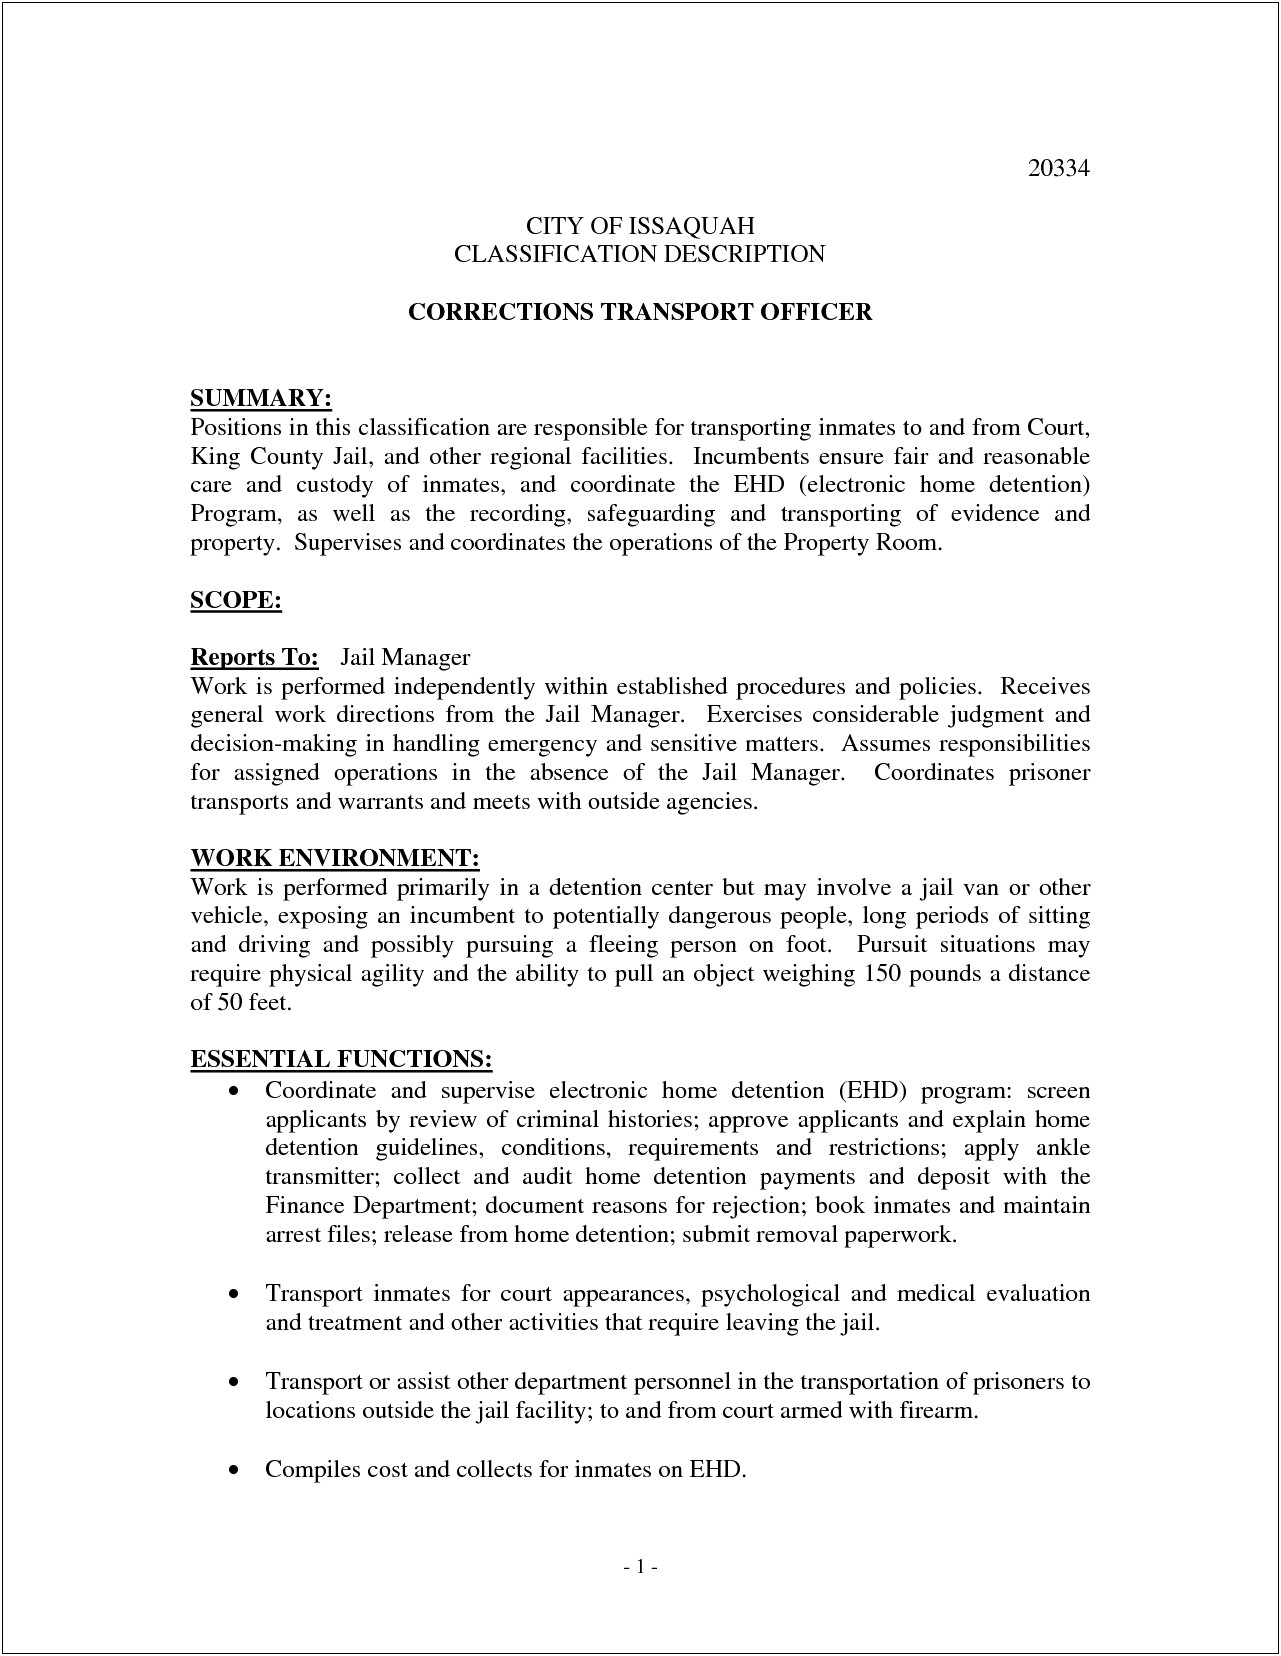 Resume Objective Detention Deputy Entry Level